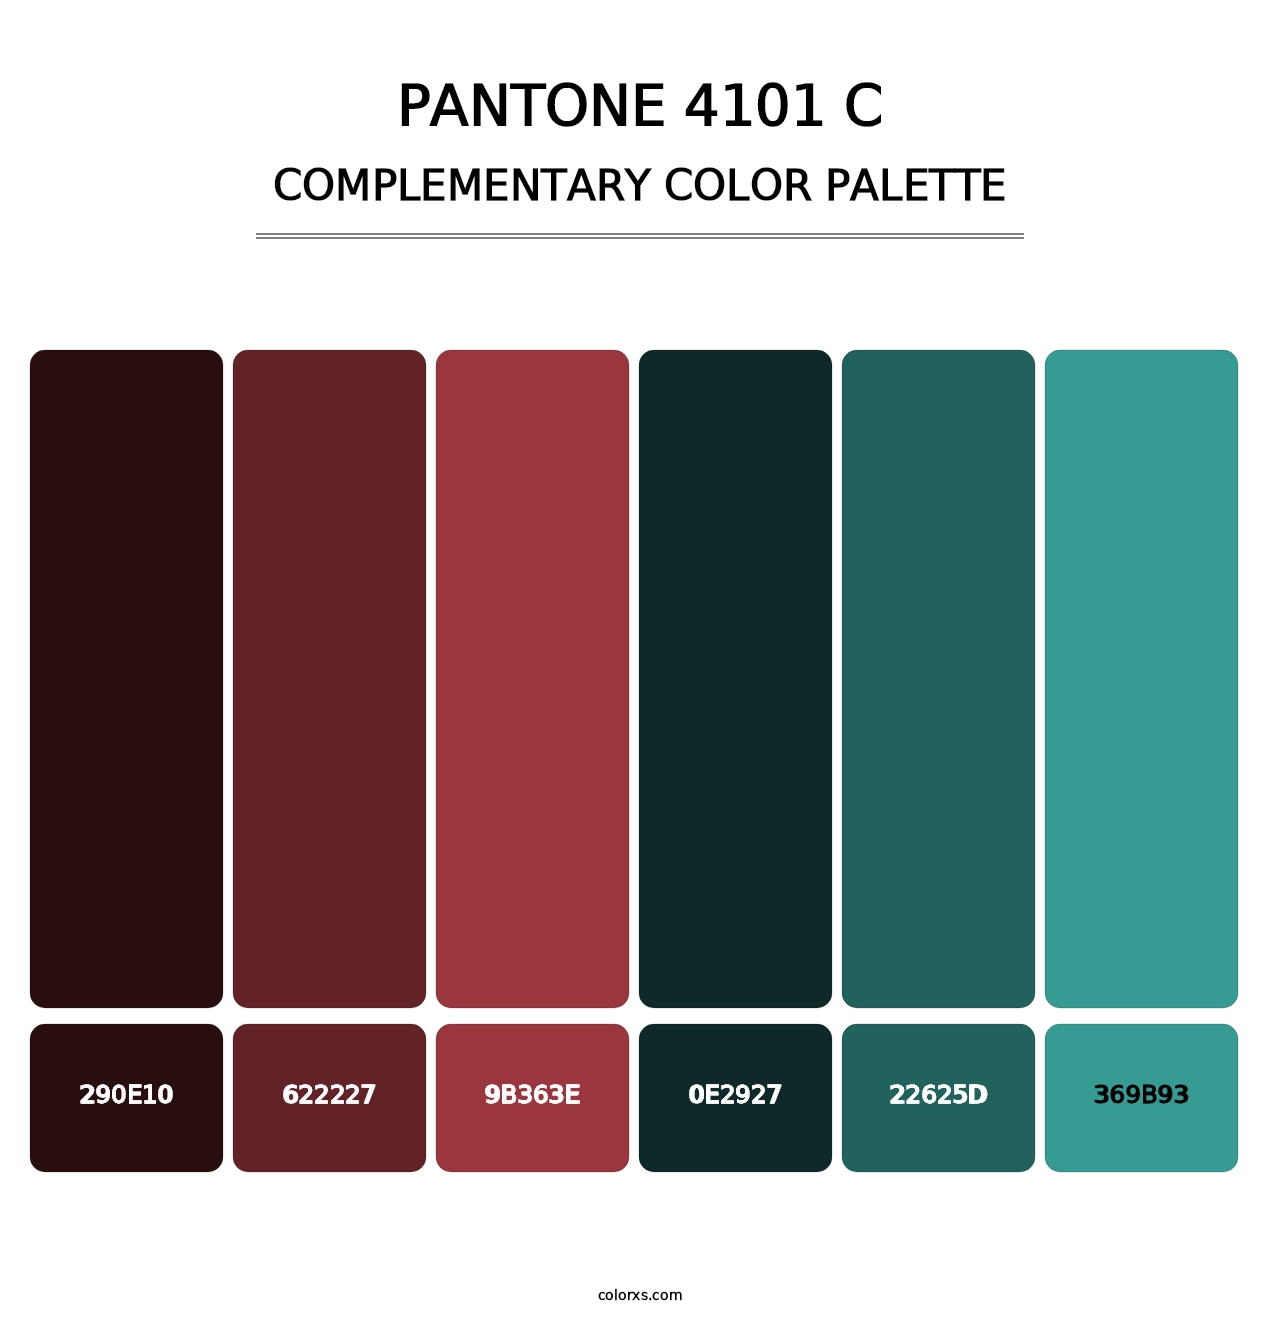 PANTONE 4101 C - Complementary Color Palette